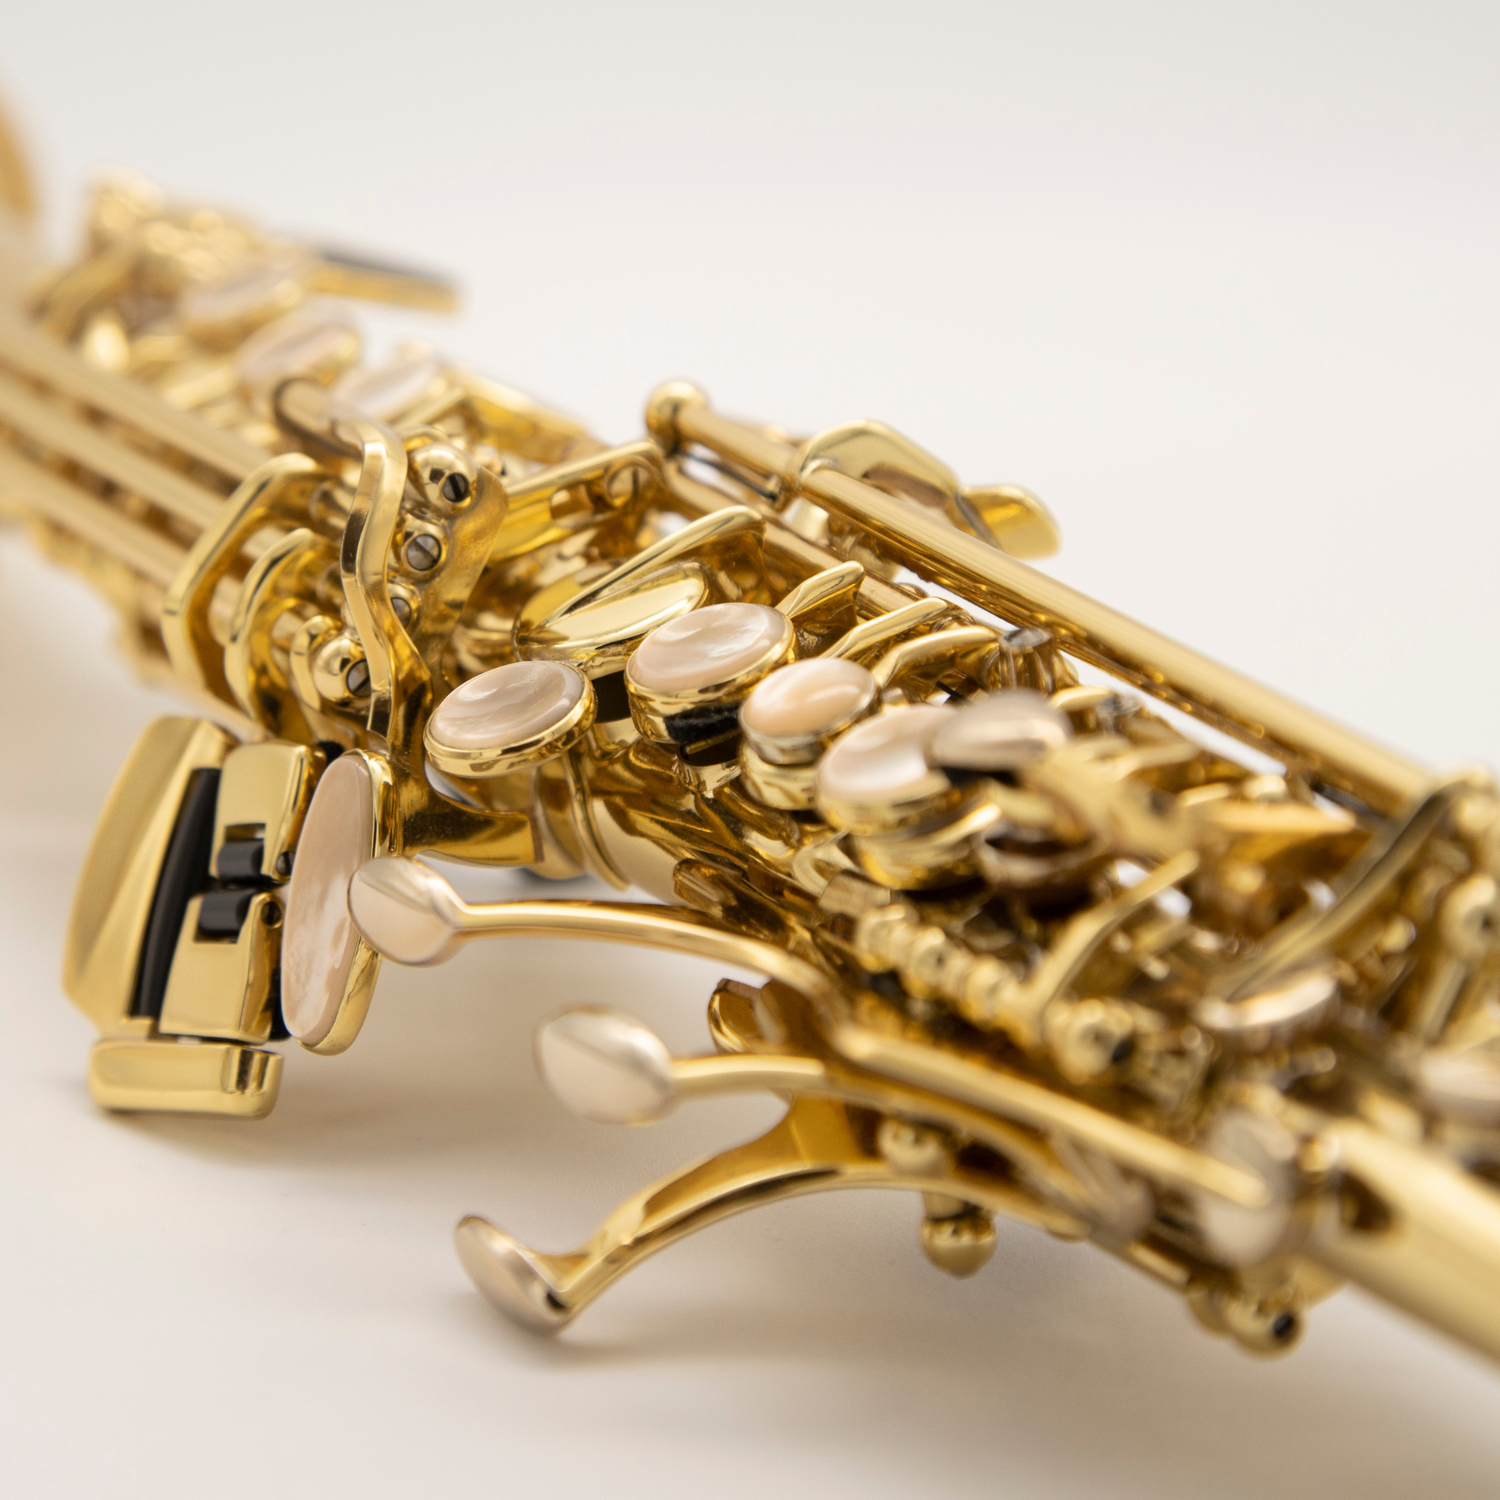 Sopranino saxophone